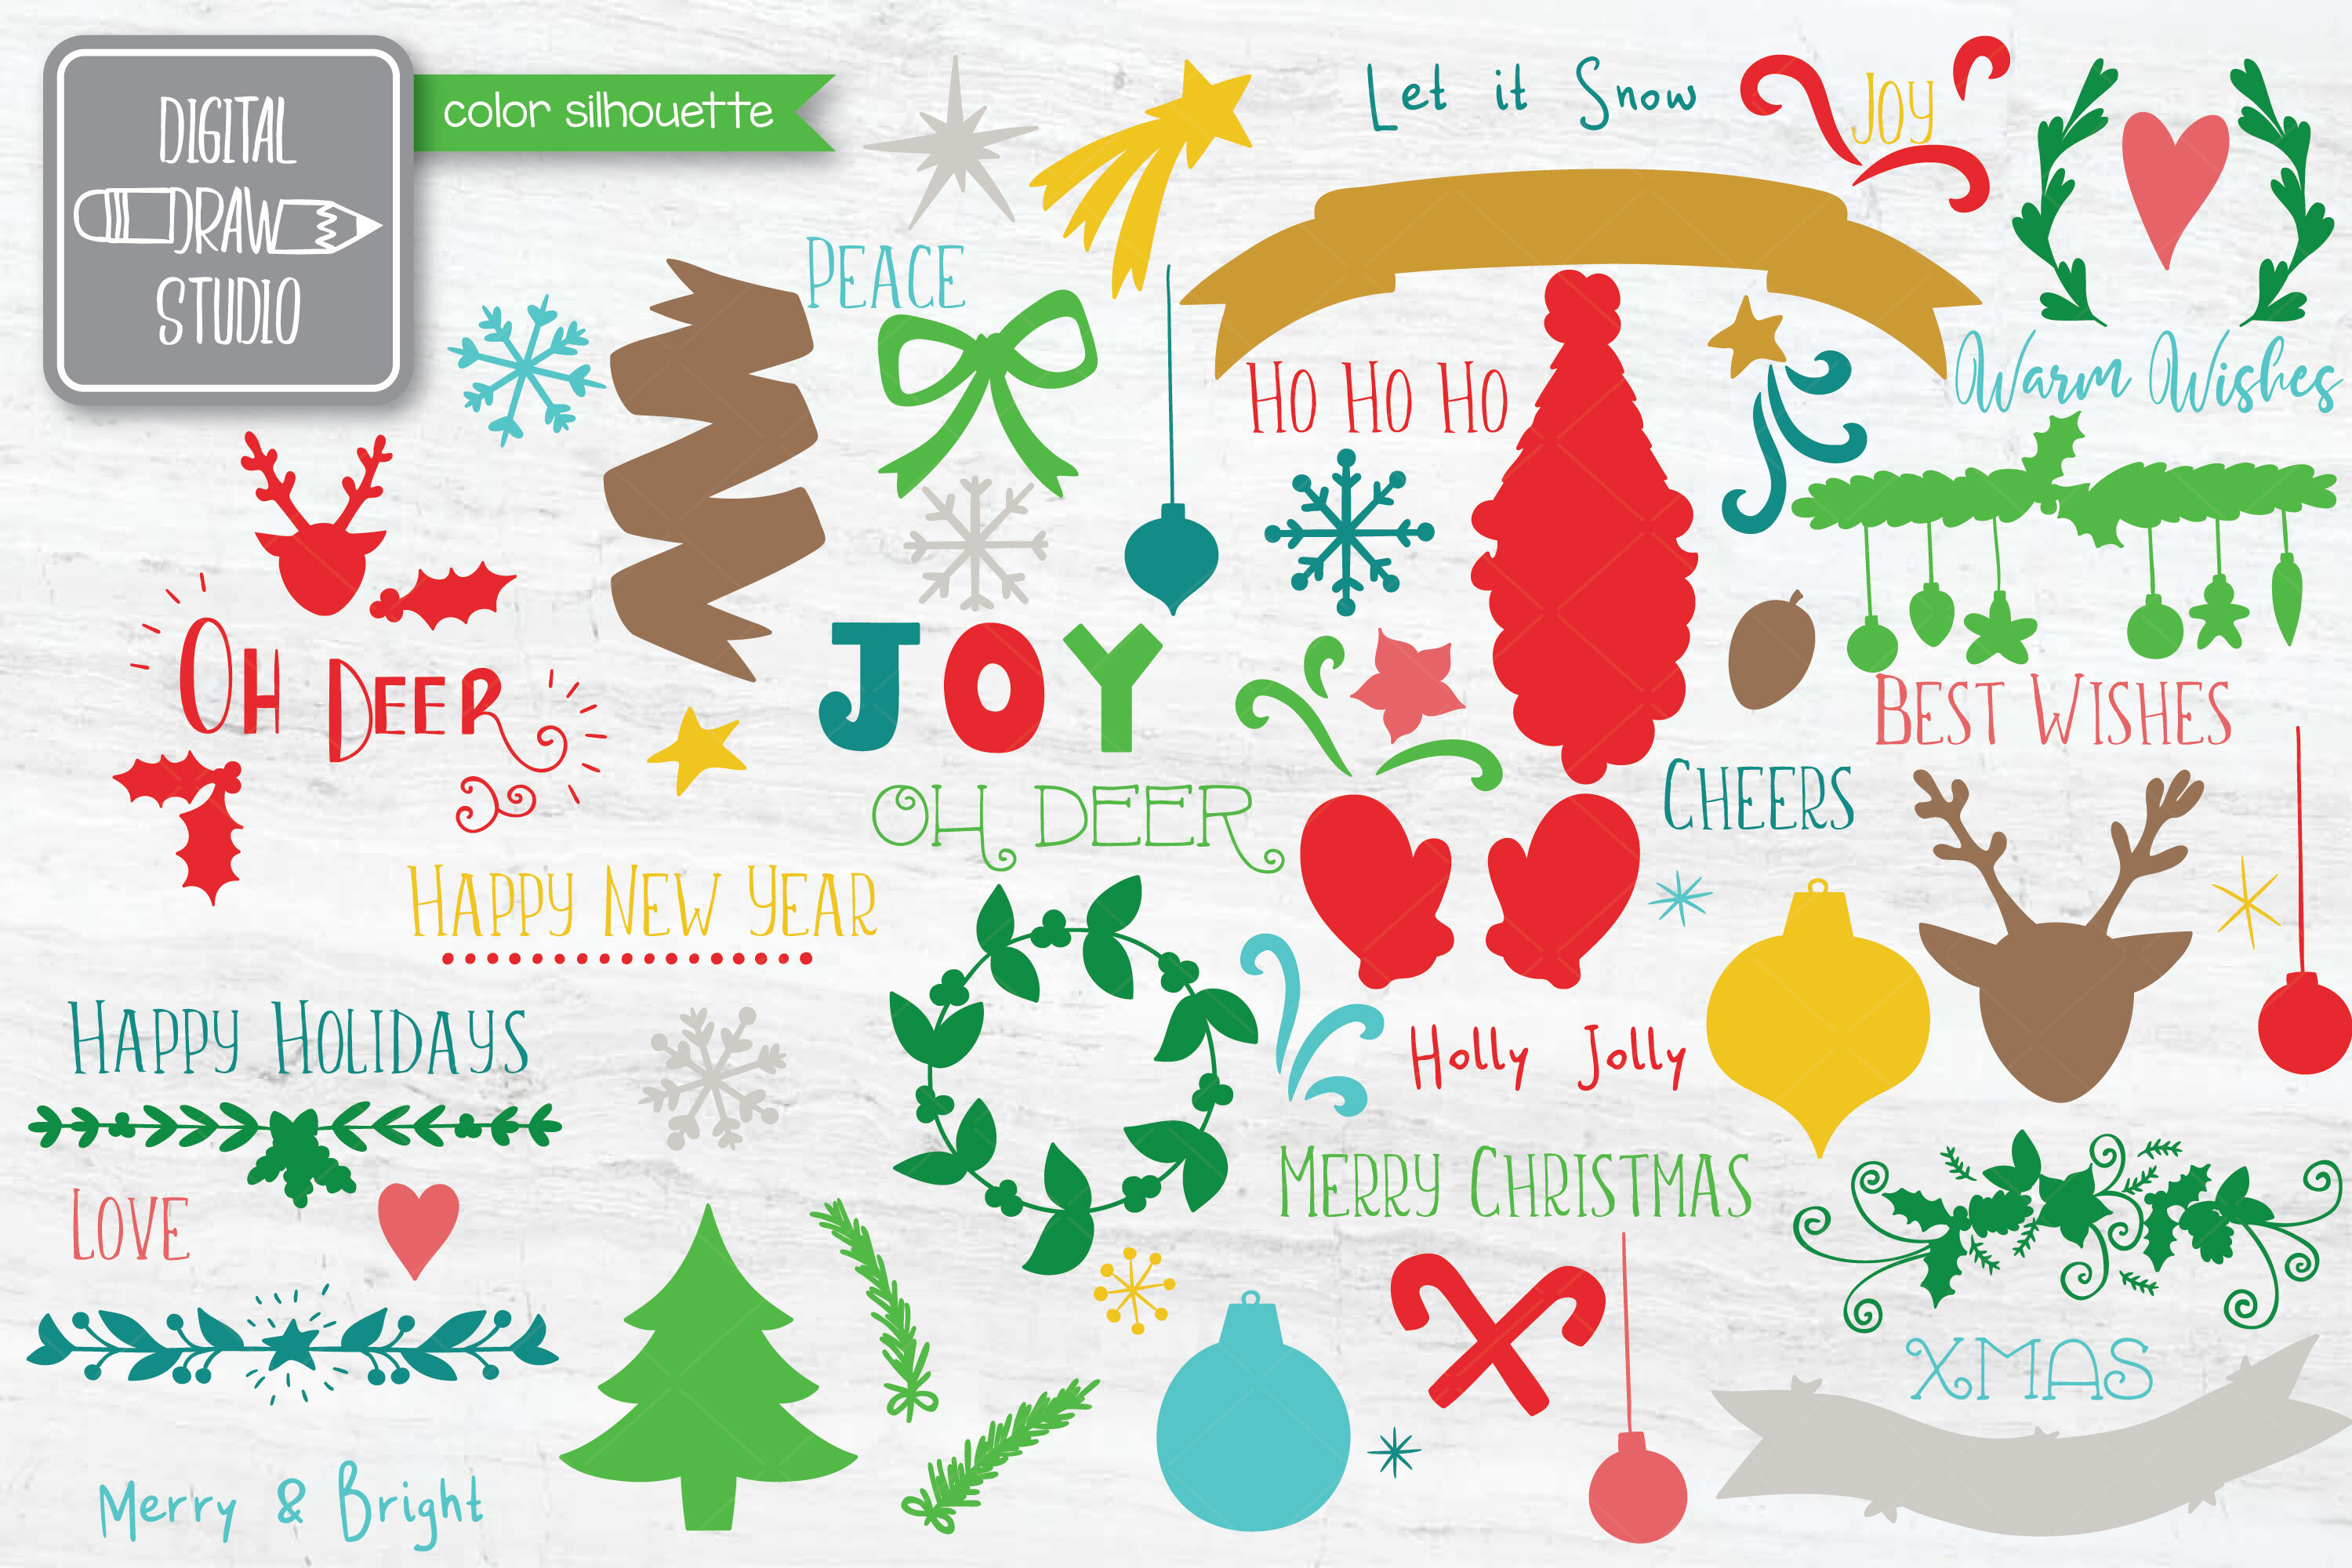 Christmas Elements Color Hand Drawn Ornaments Decorative Holiday By Digital Draw Studio Thehungryjpeg Com